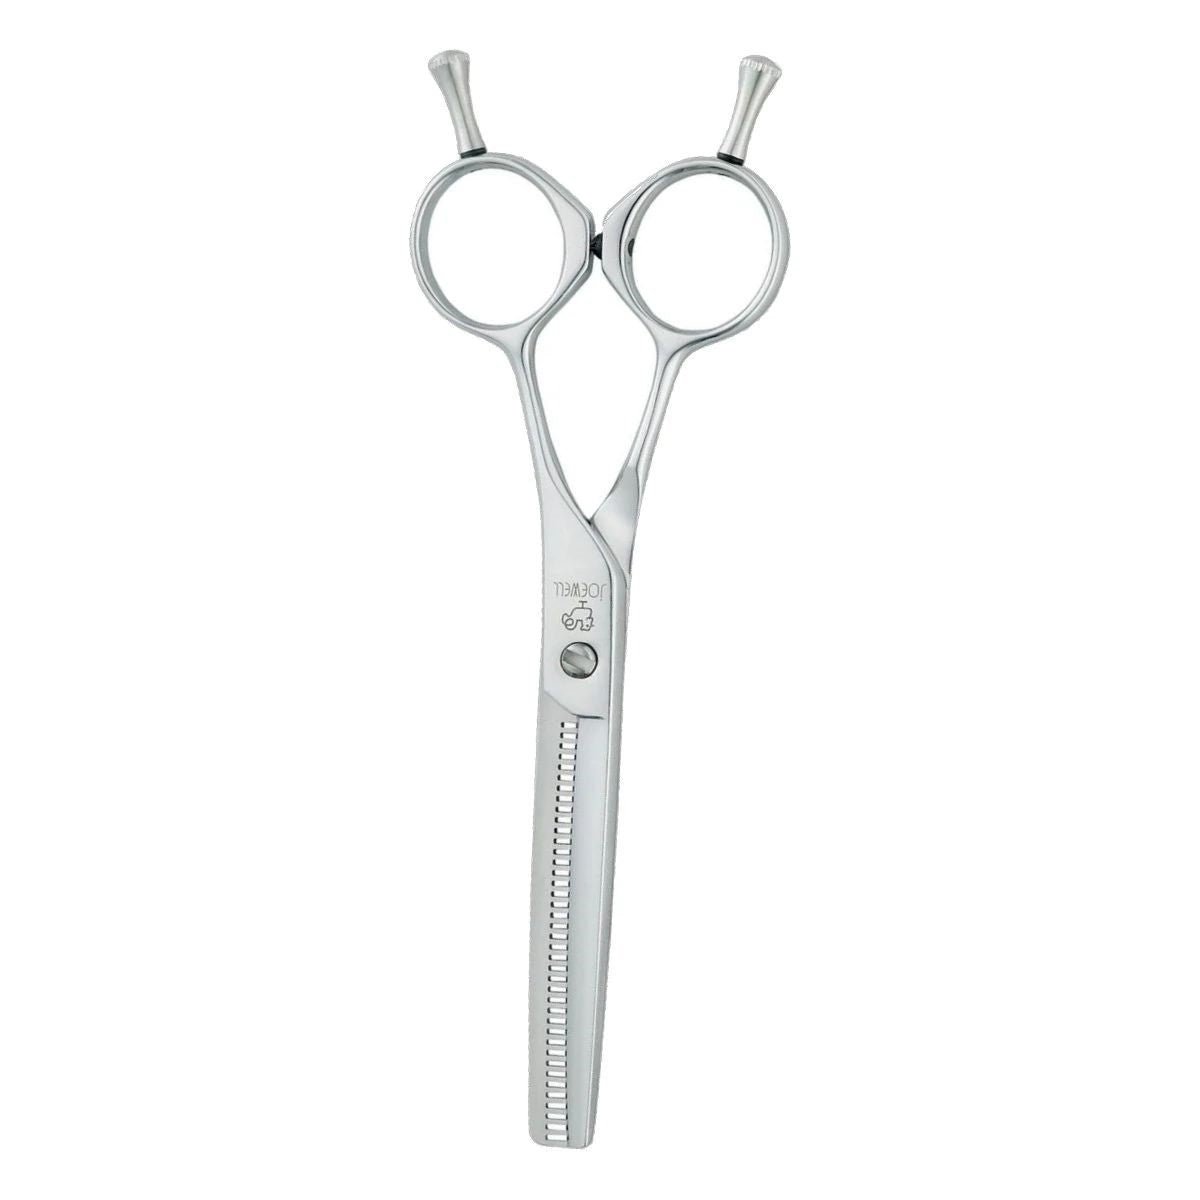 Joewell E40 Hairdressing Thinning Scissor - Japan Scissors